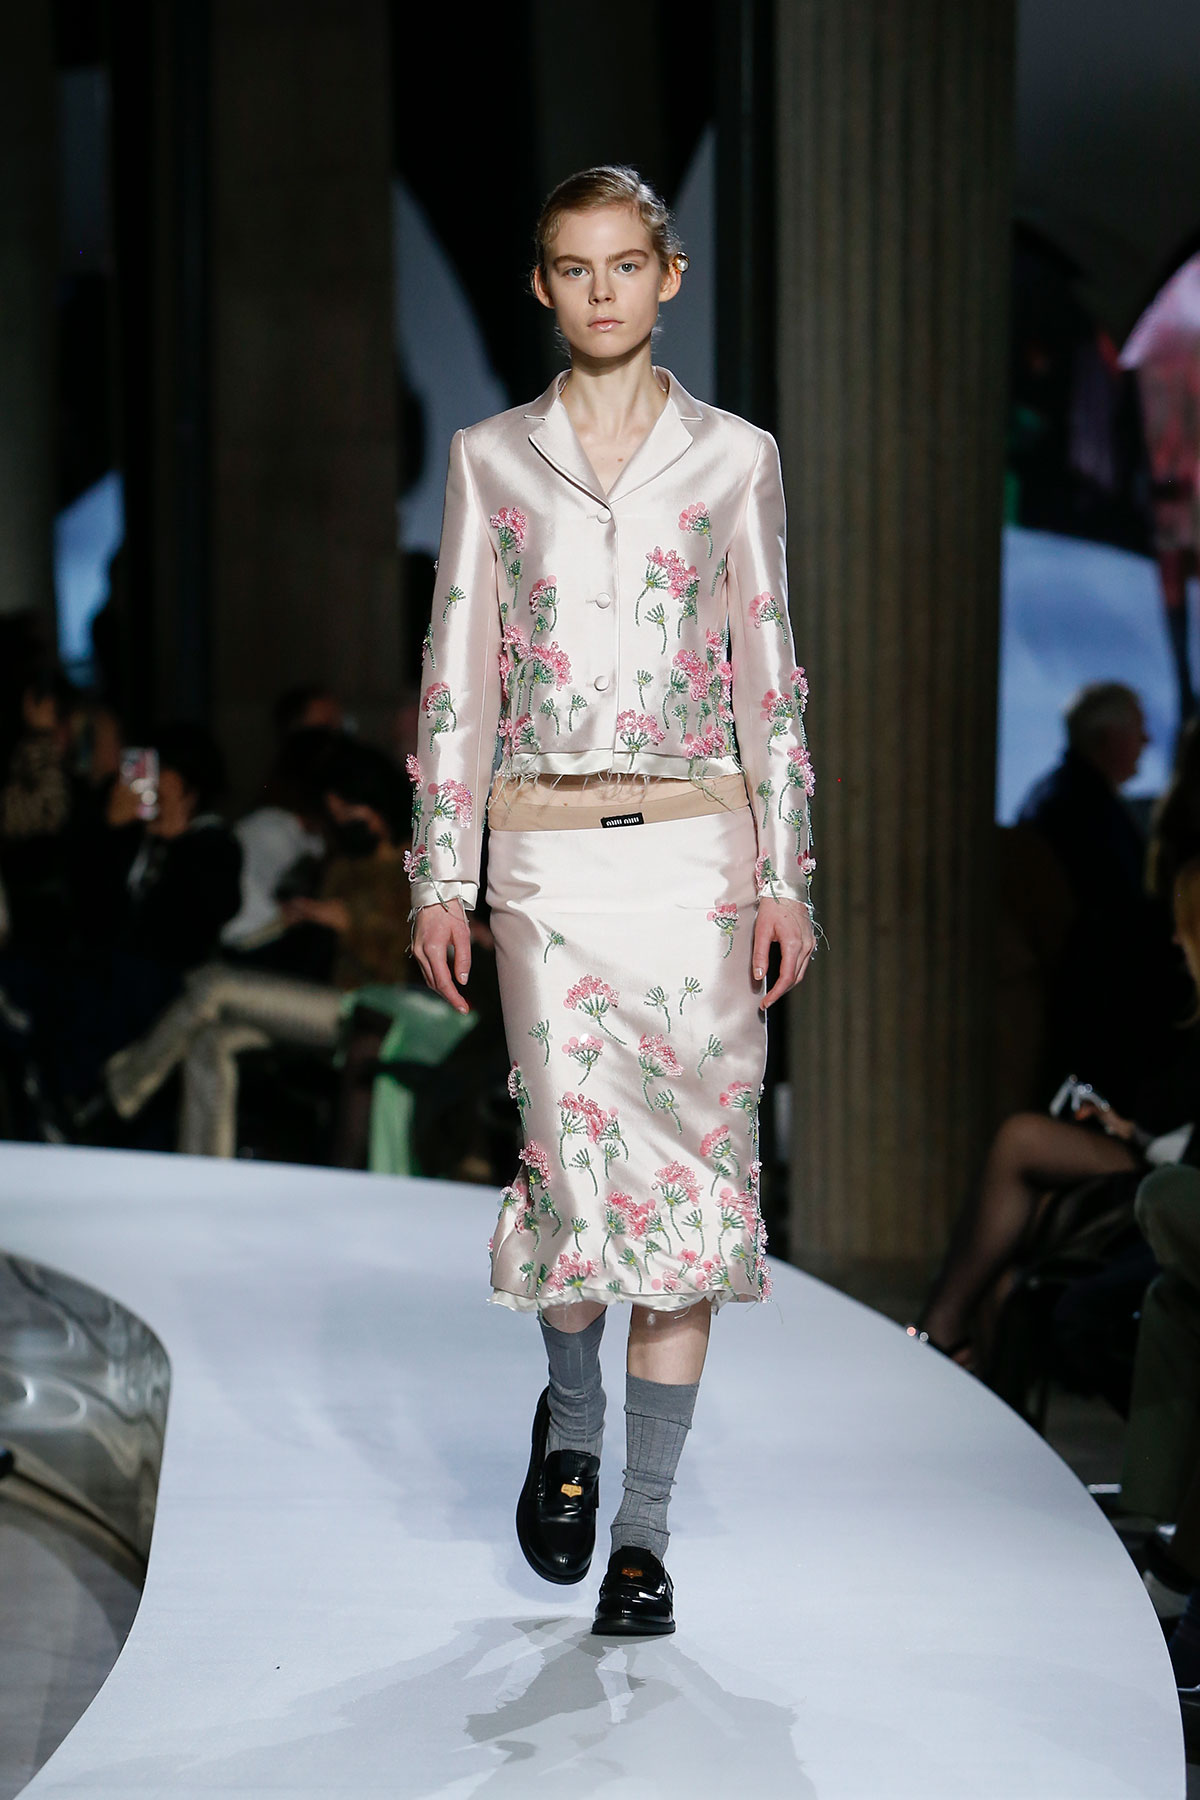 Miu Miu Spring Summer 2022 Collection | The Fashionography